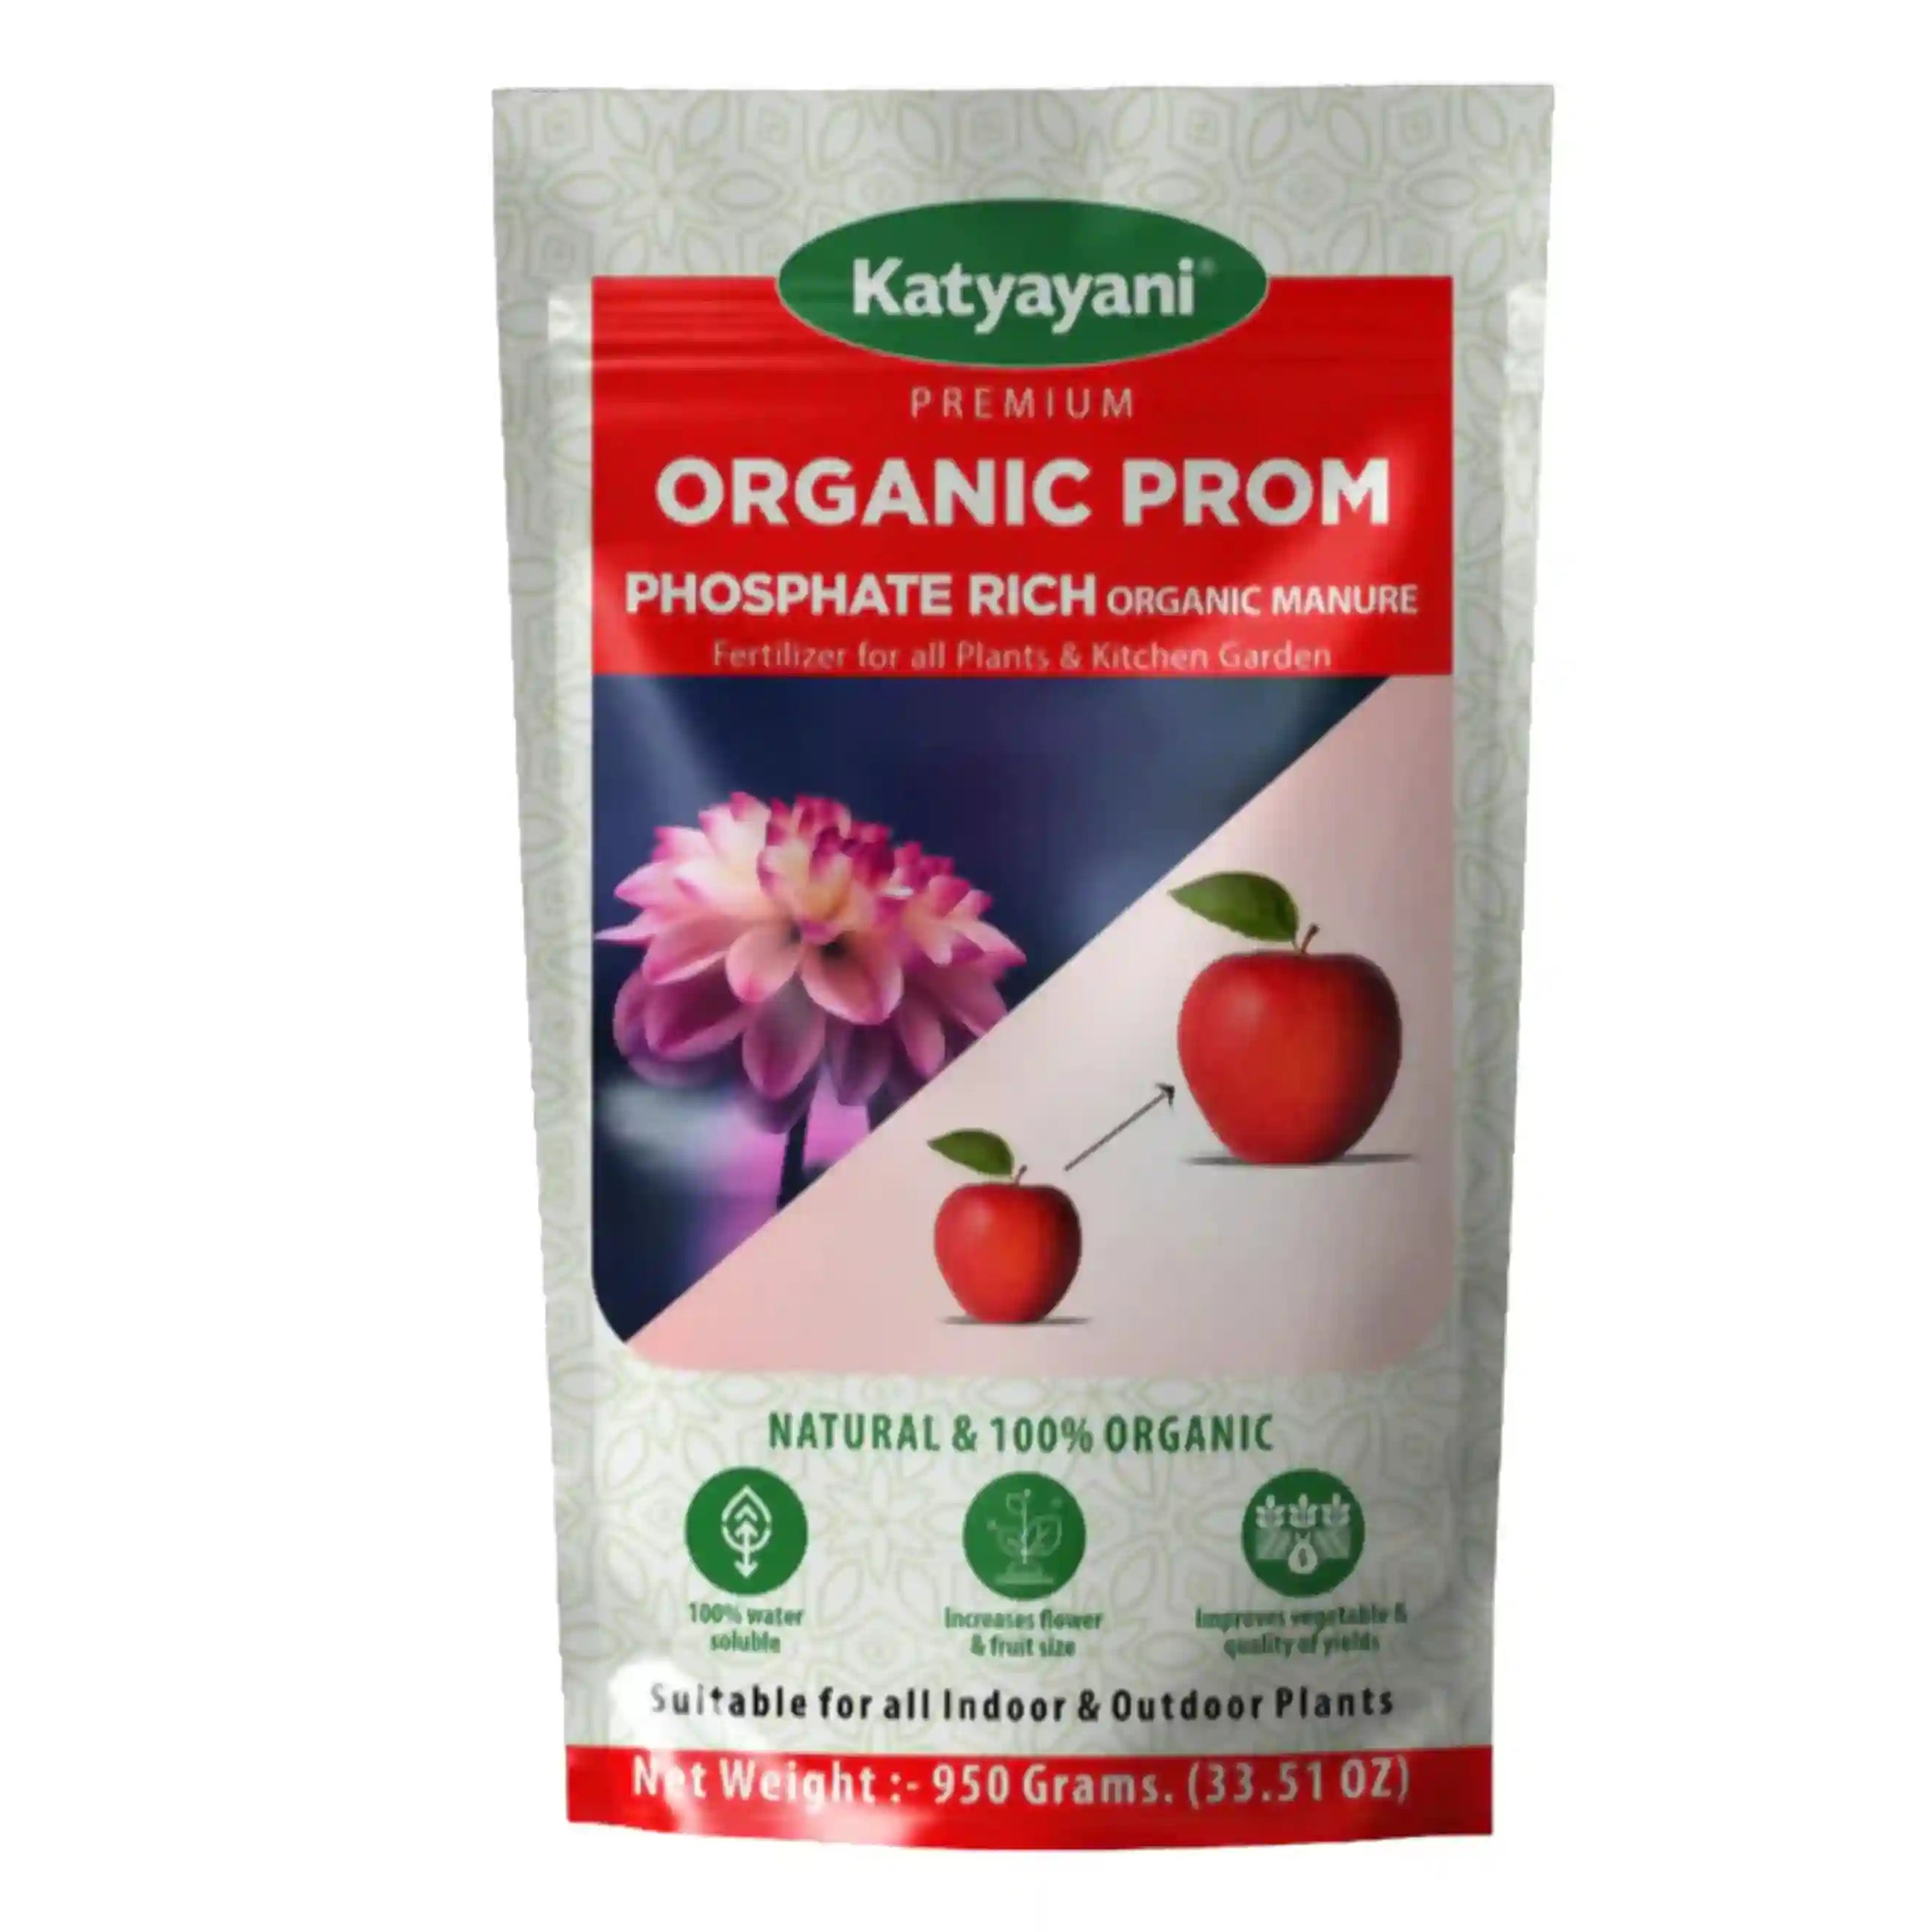 Katyayani Prom Organic Fertilizer | Phosphate Rich Organic Manure | Fertilizer